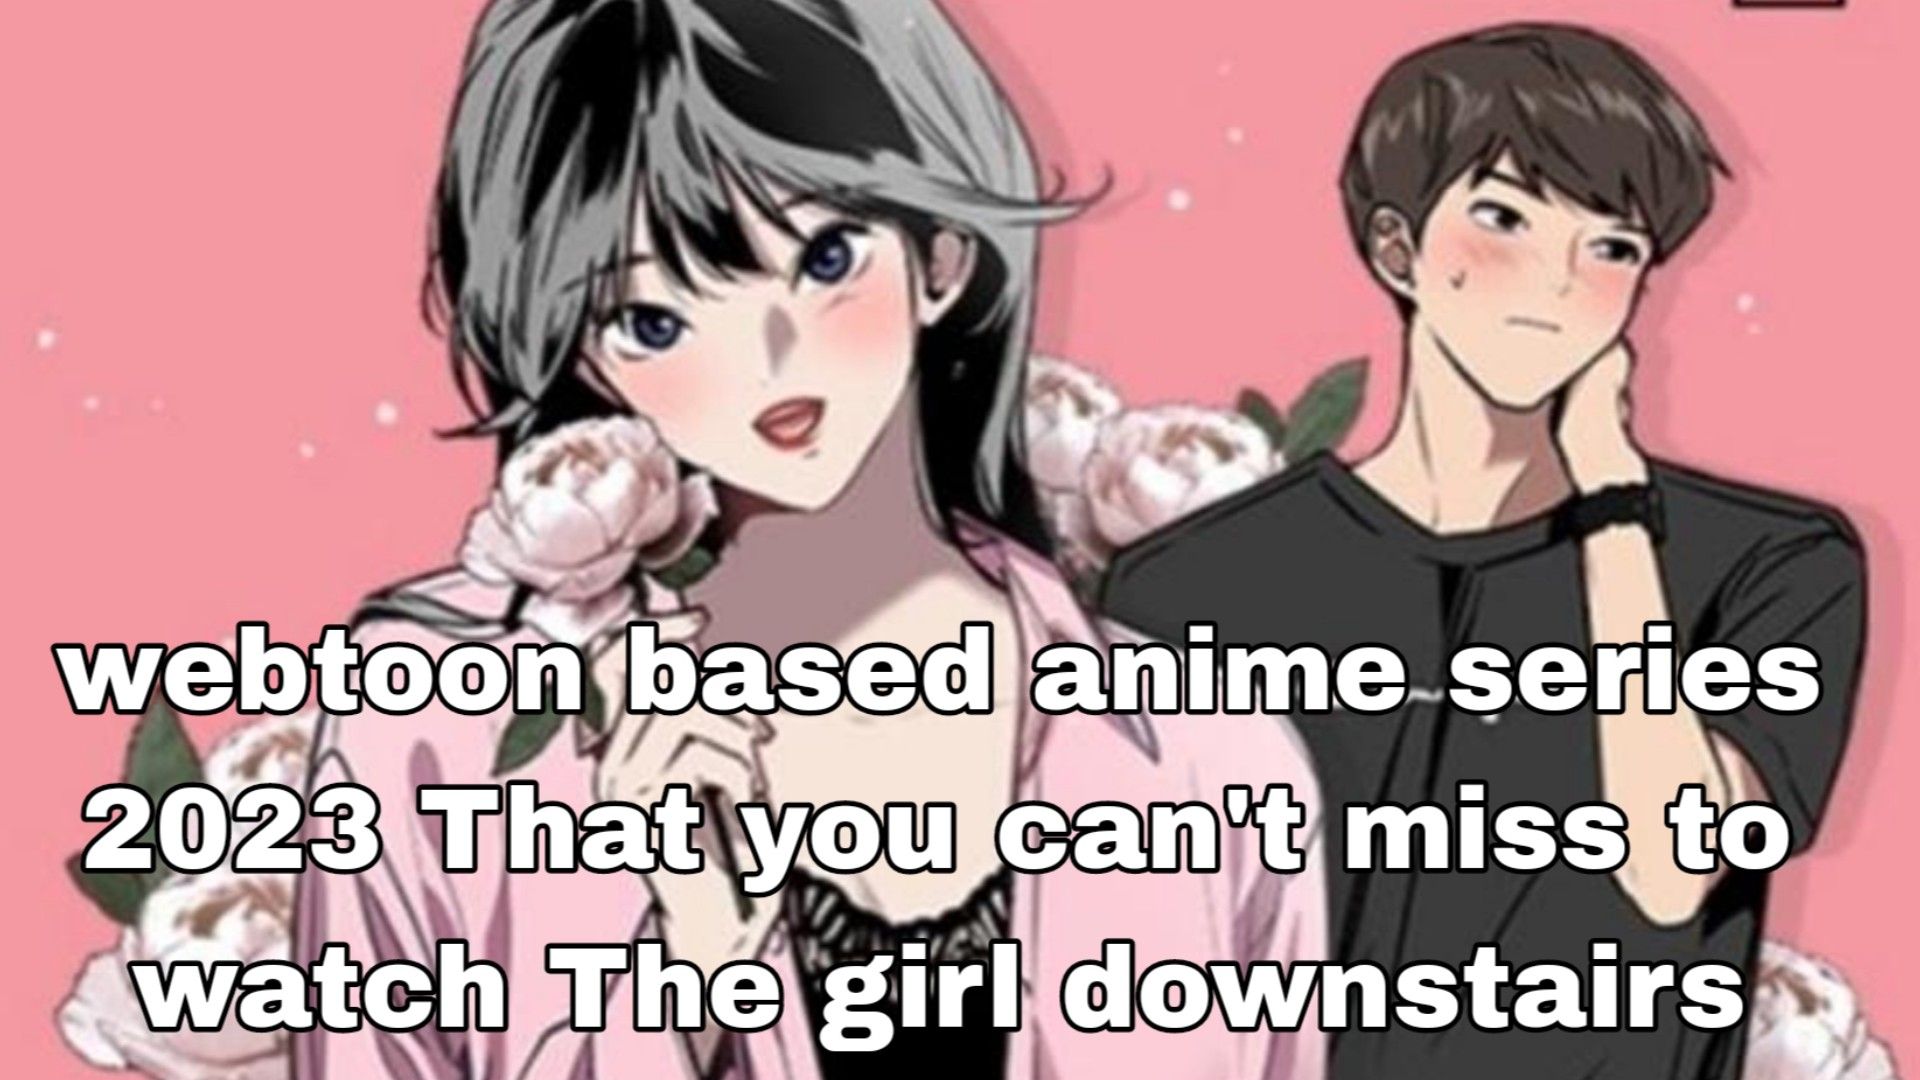 Le manhwa The Girl Downstairs adapté en anime